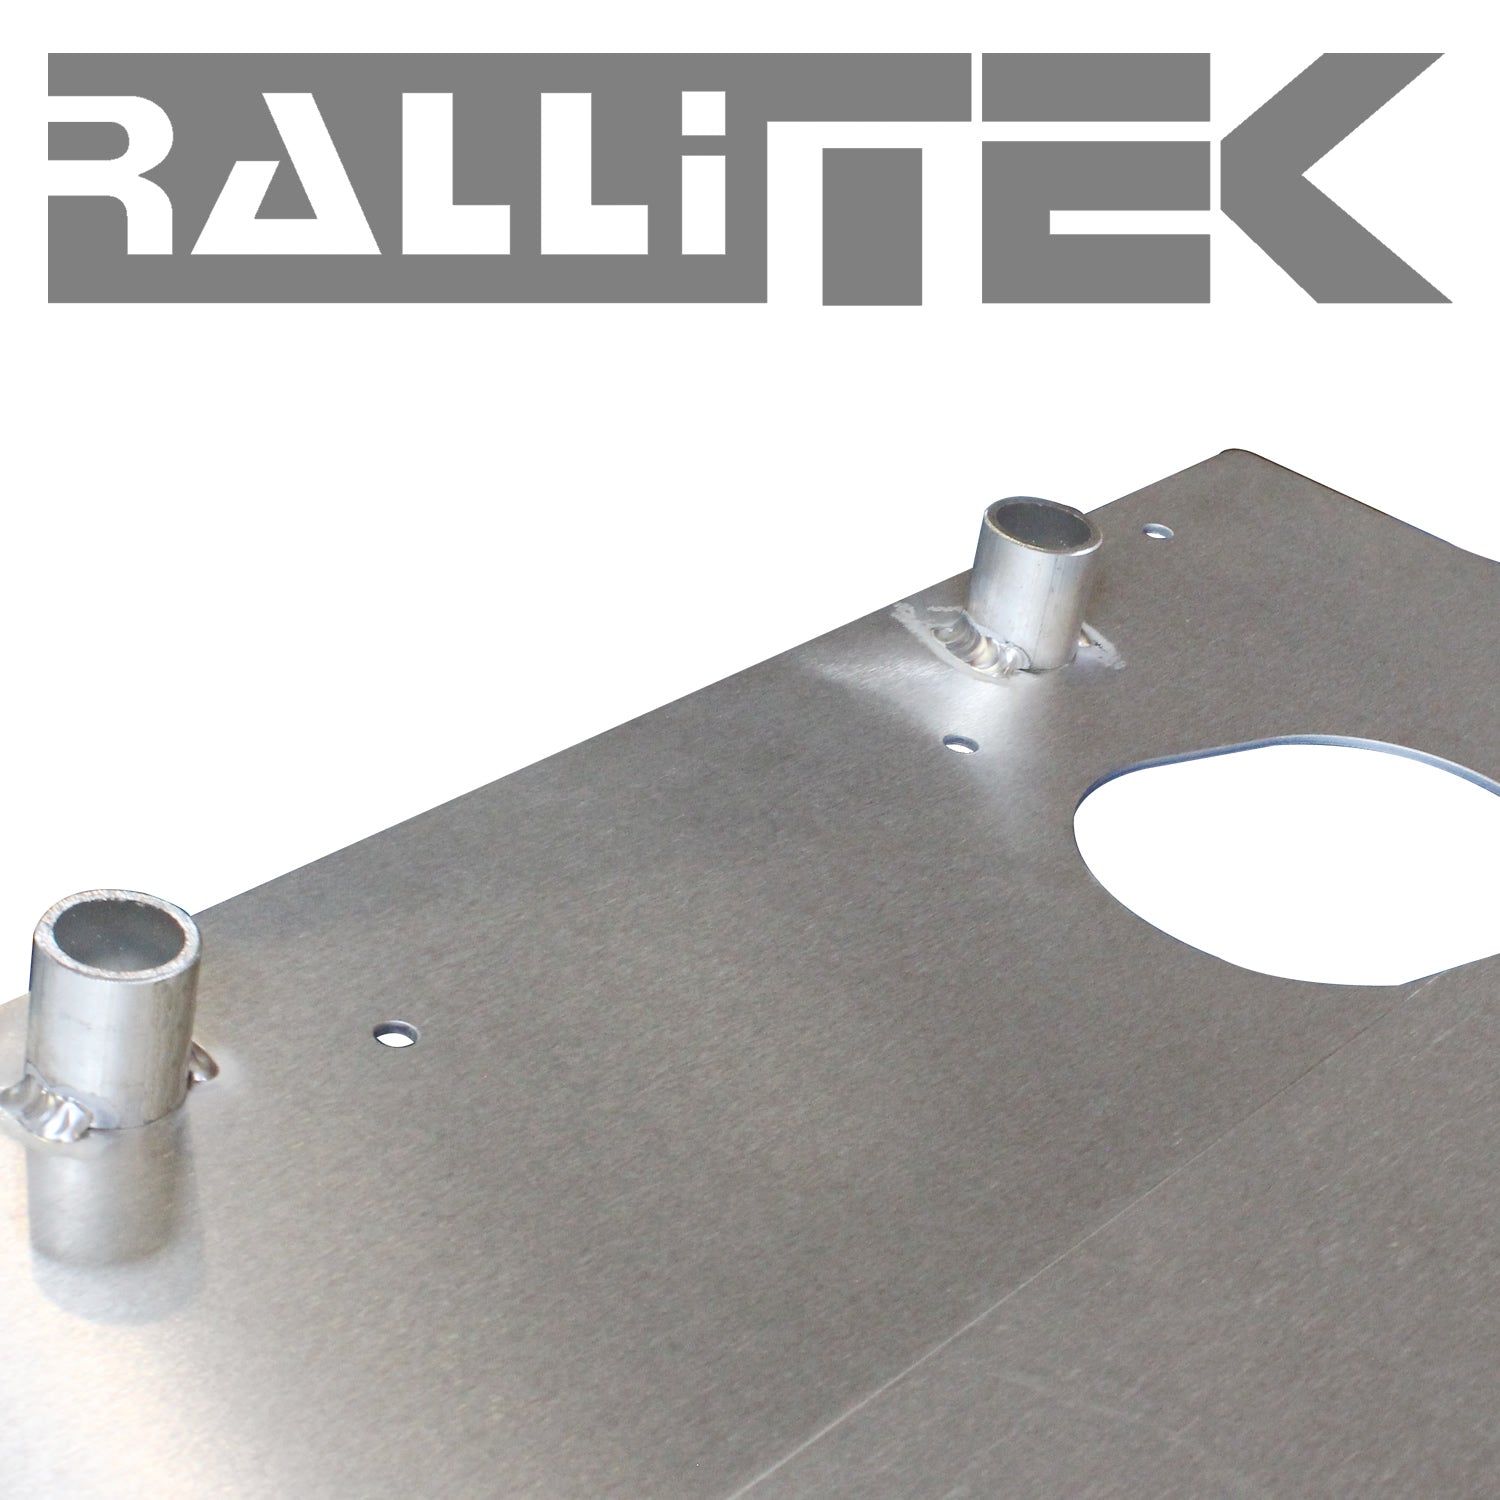 RalliTEK Front Skid Plate - Forester 2014-2018